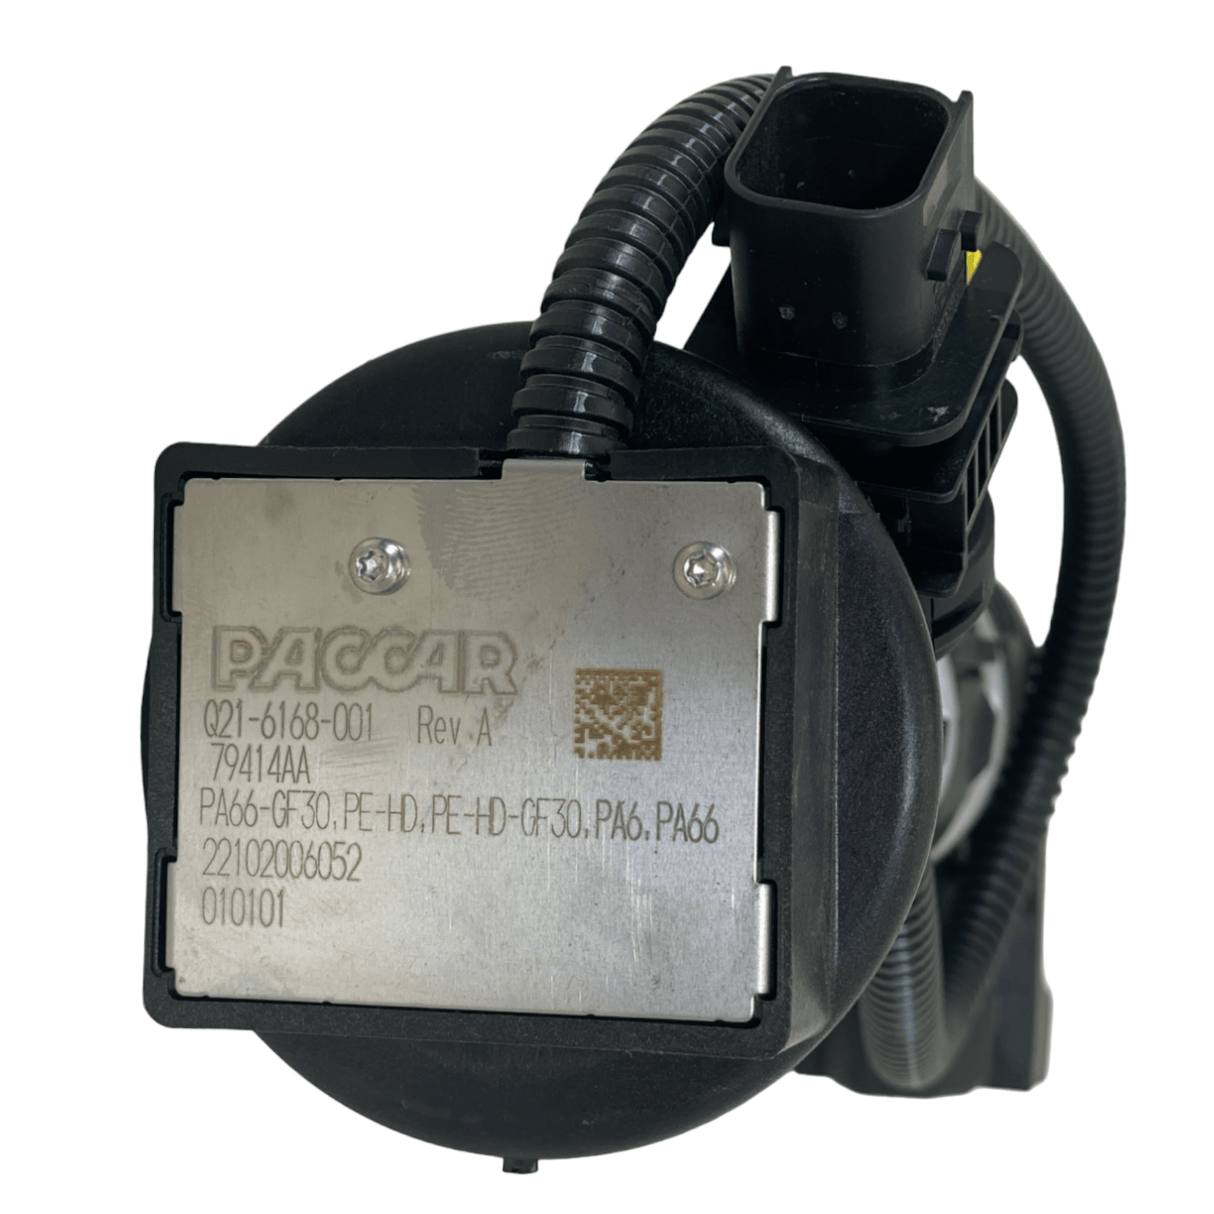 Oem Paccar Q21-6168-001K1T Sensor -Def Level Q21-6171-001K1T.